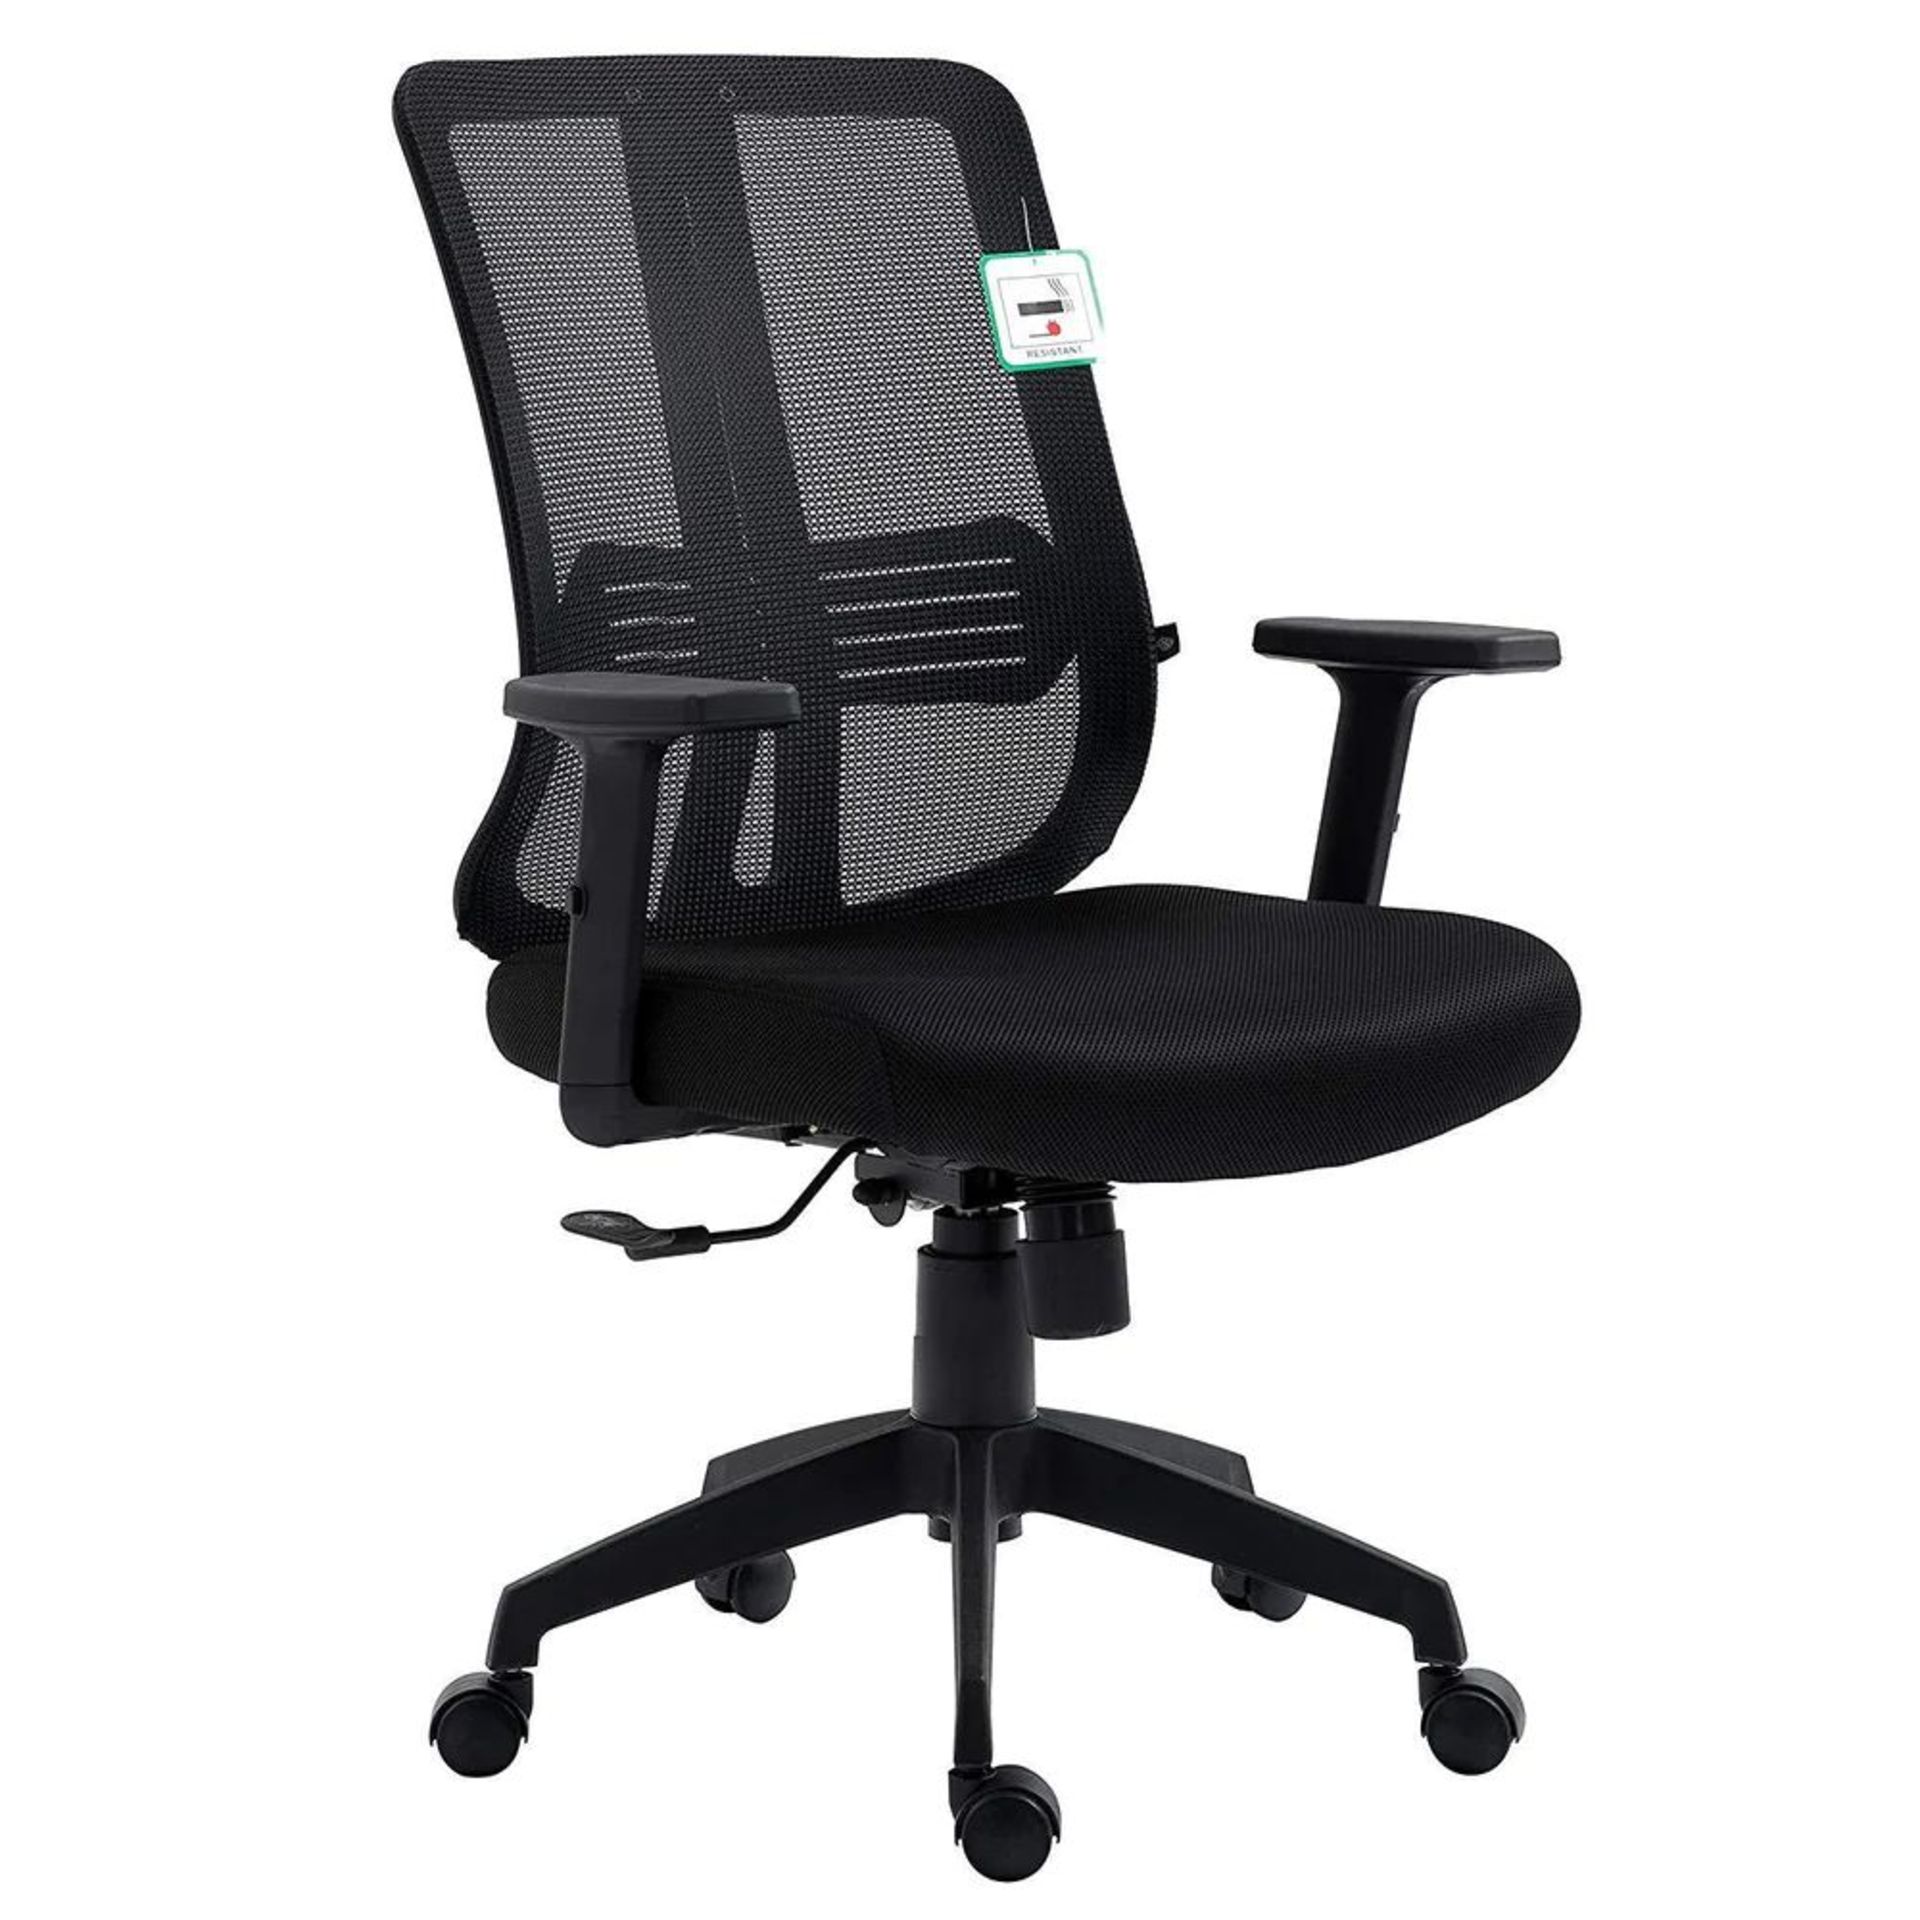 Black Mesh Medium Back Executive Office Chair Swivel Desk Chair with Synchro-Tilt, Adjustable